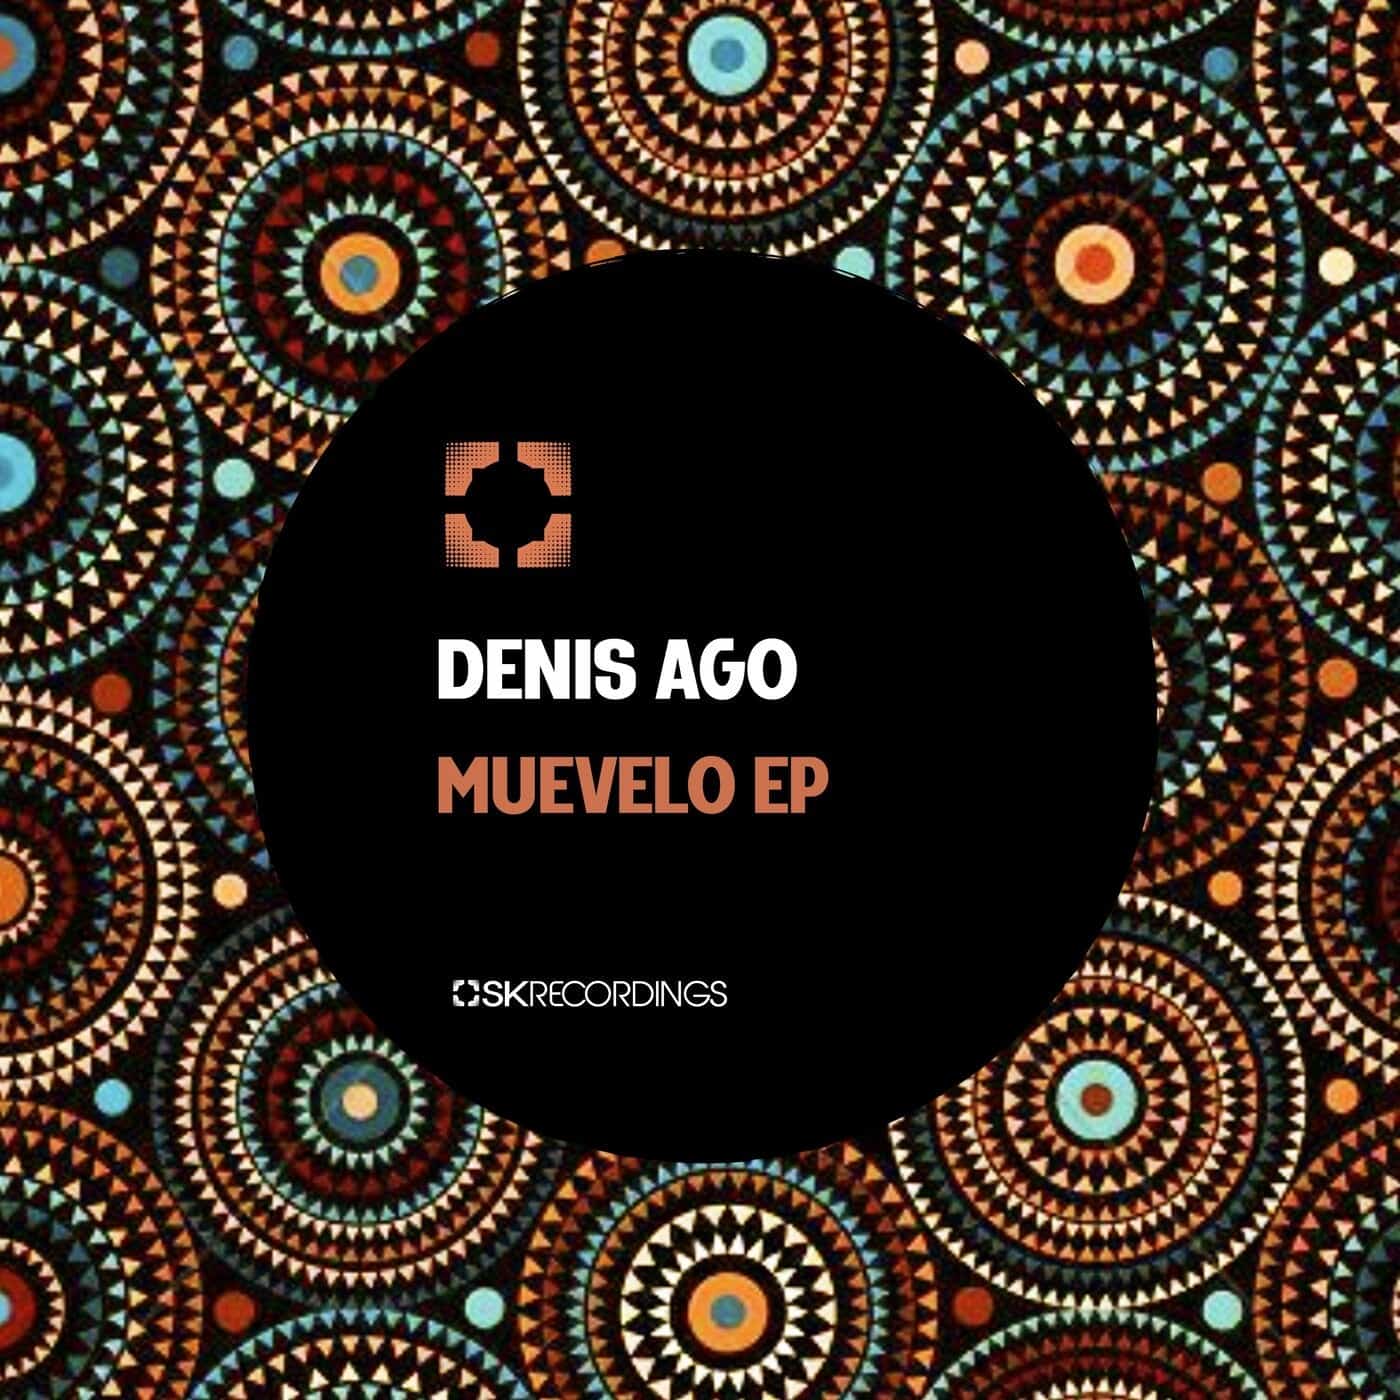 Download Denis Ago - Muevelo on Electrobuzz